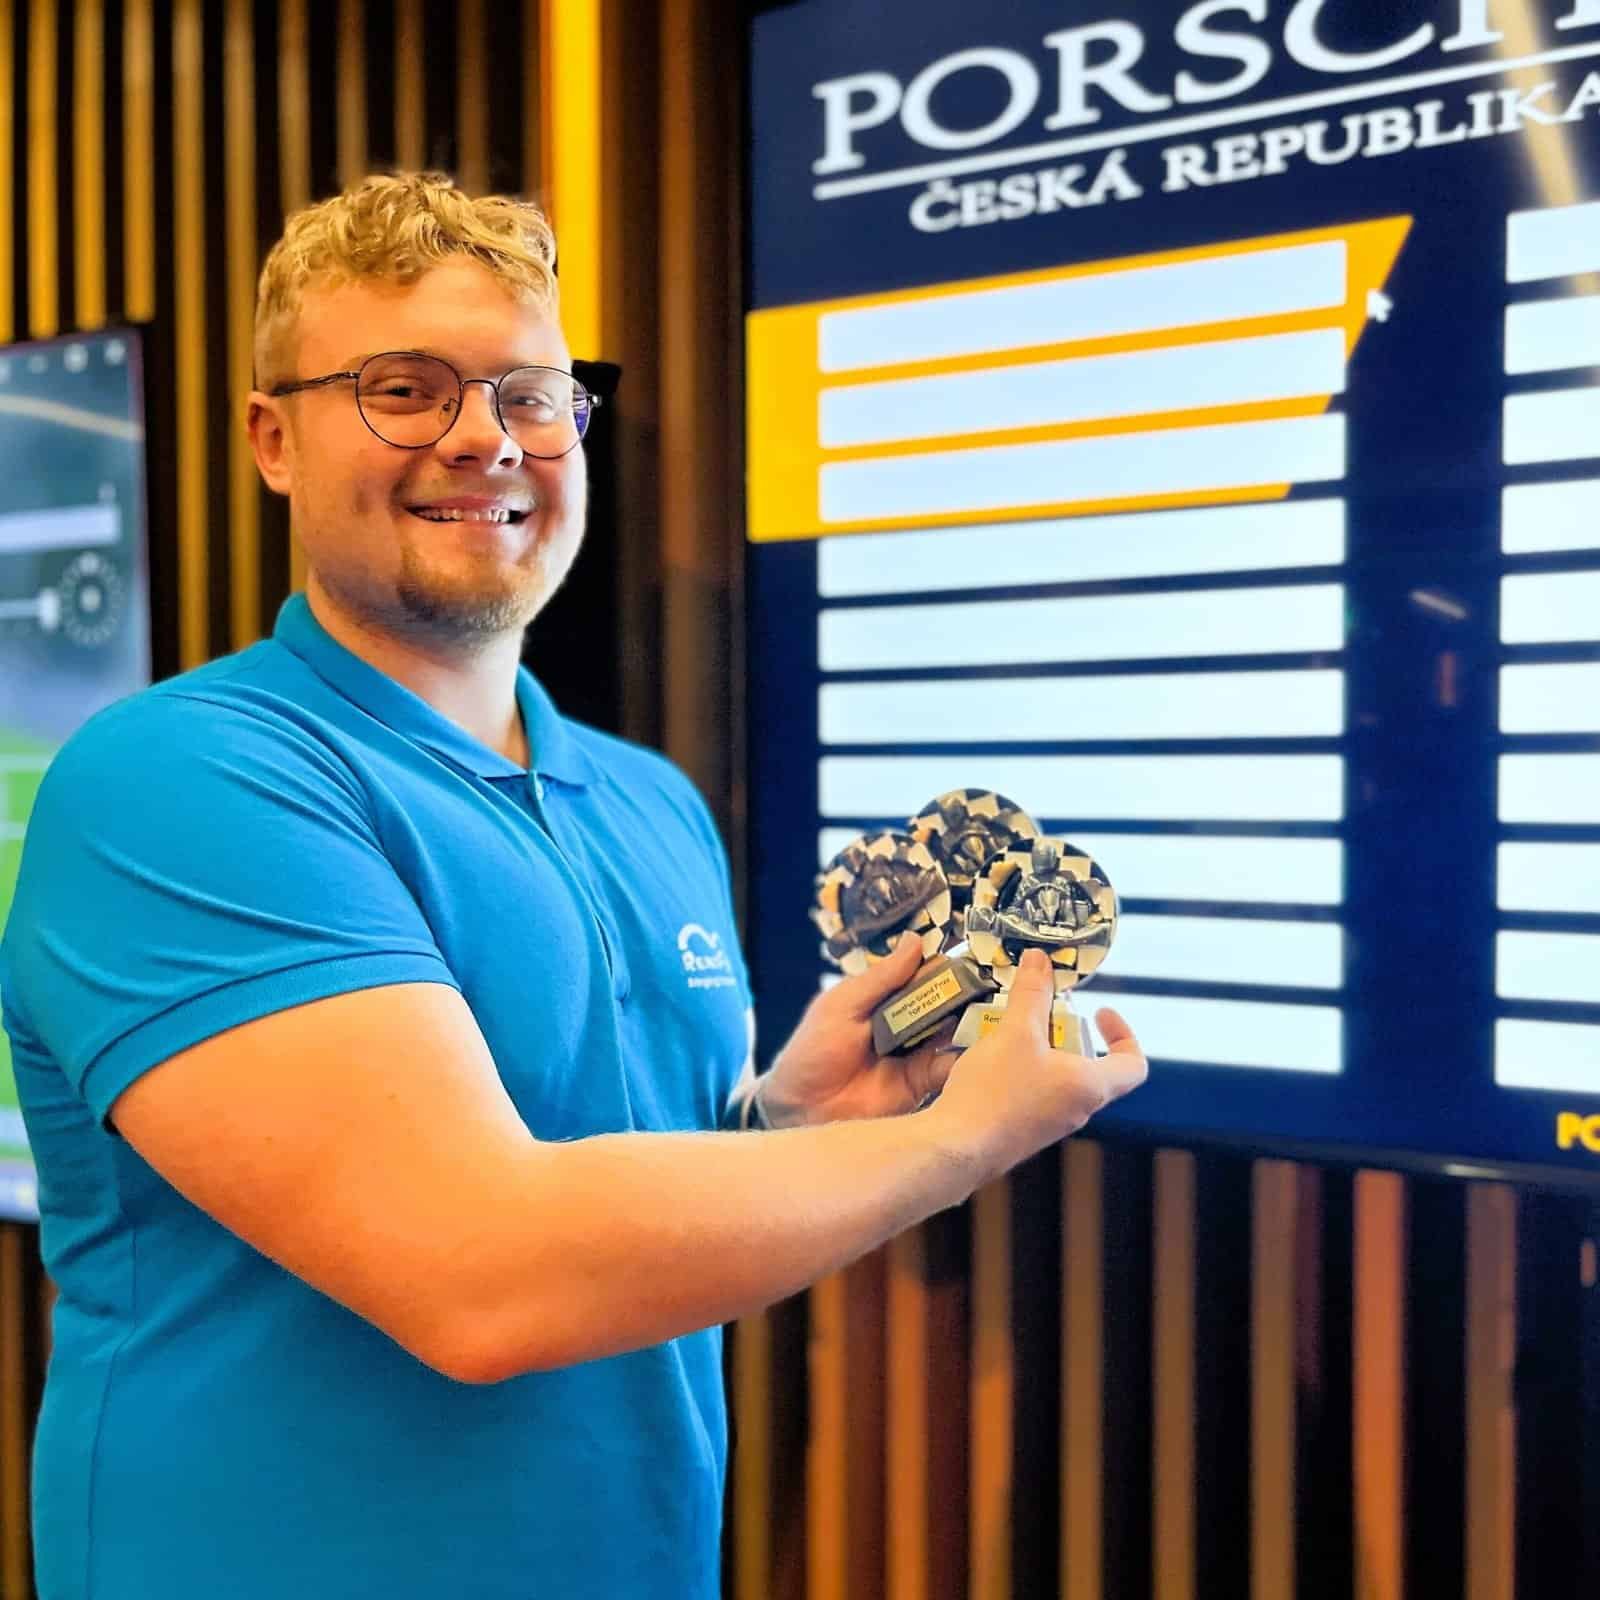 RoarFun Clients Porsche immersive motion racing simulators at Porsche sales event